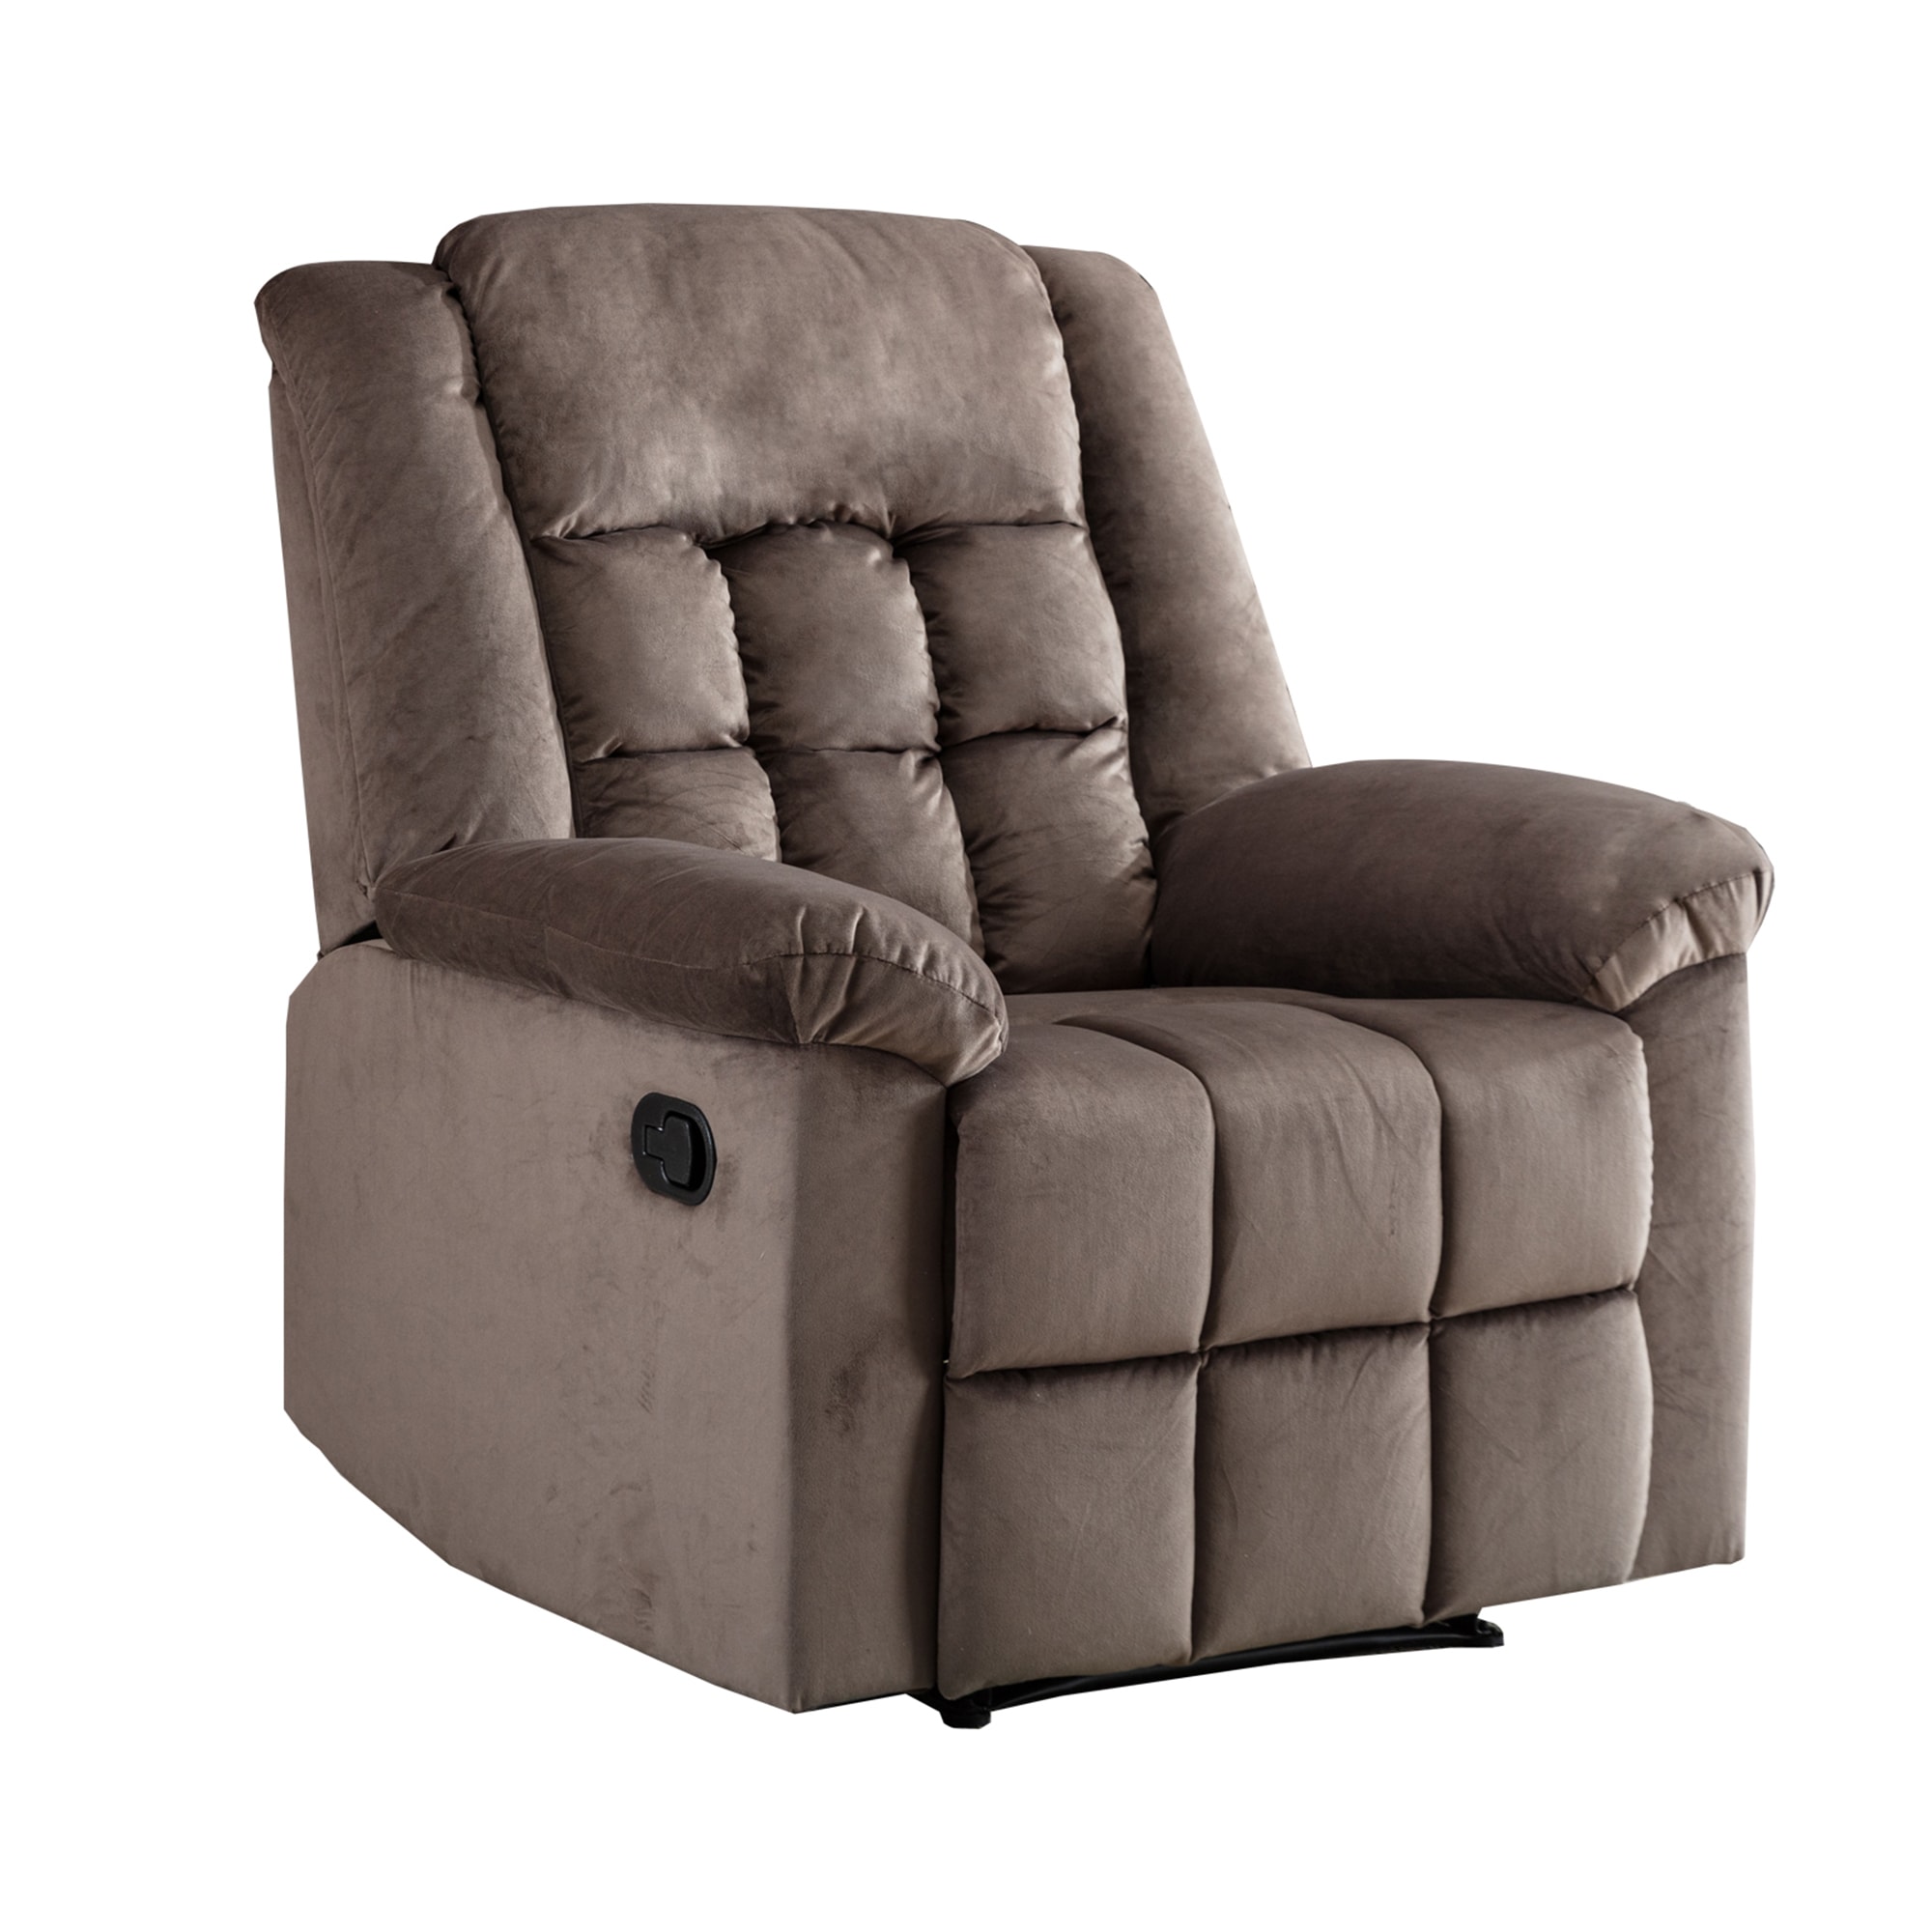 Multi-Purpose Recliner Cushion – 100% Polyester Velour Recliner